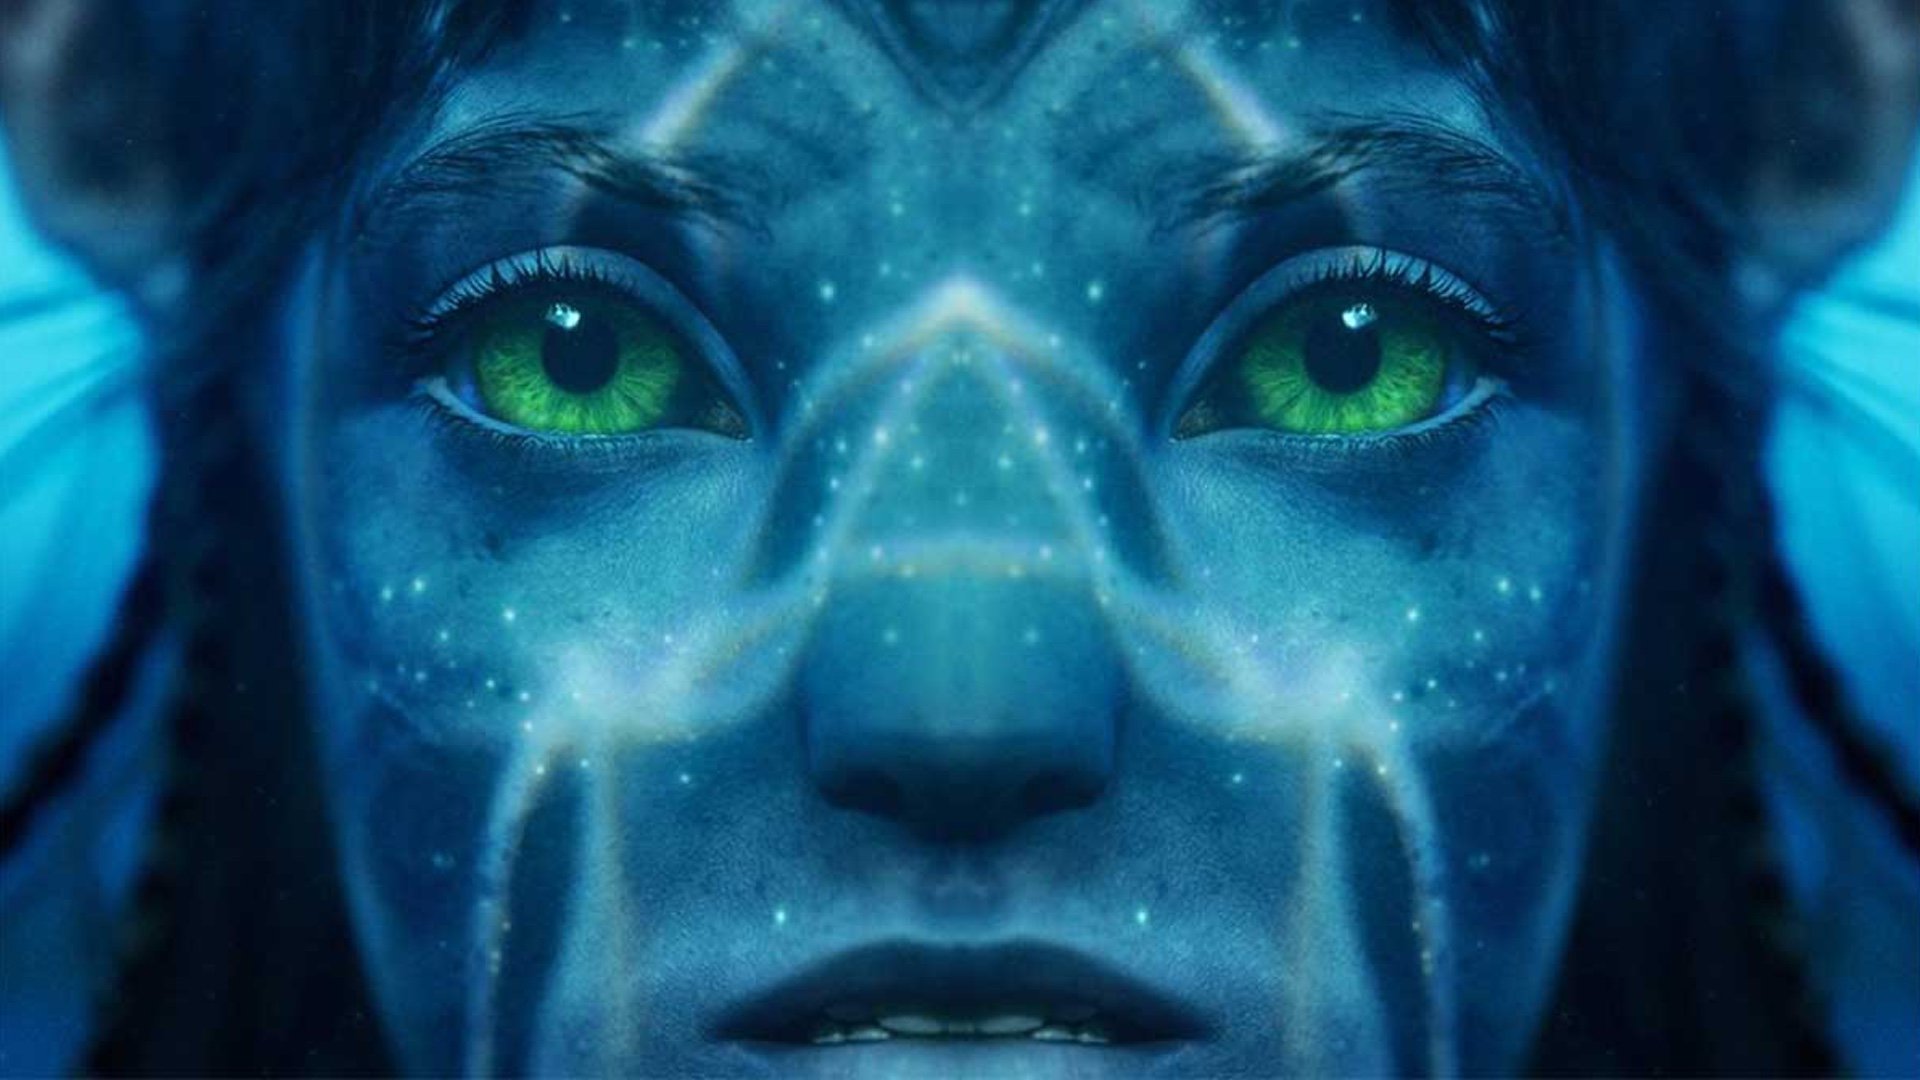 Avatar sequel earns film critics praise for visual spectacle  Reuters